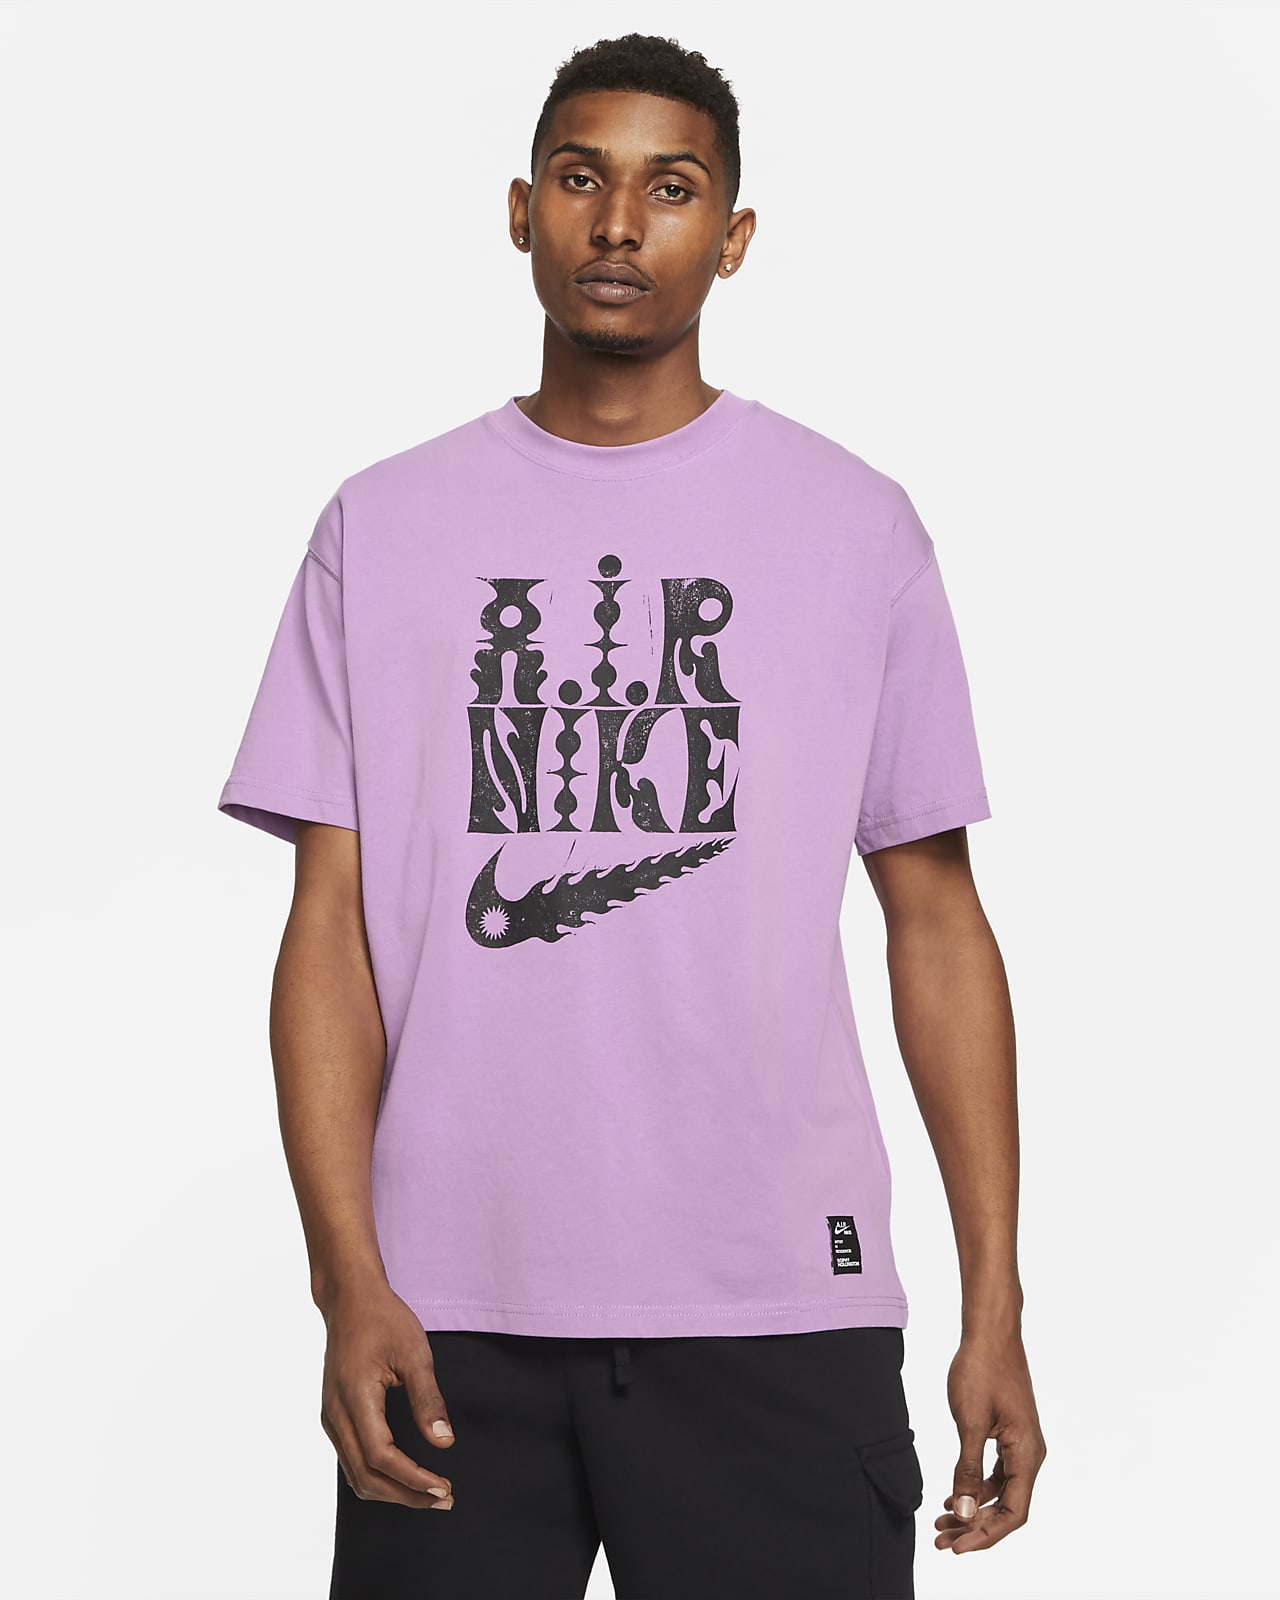 violet nike shirt